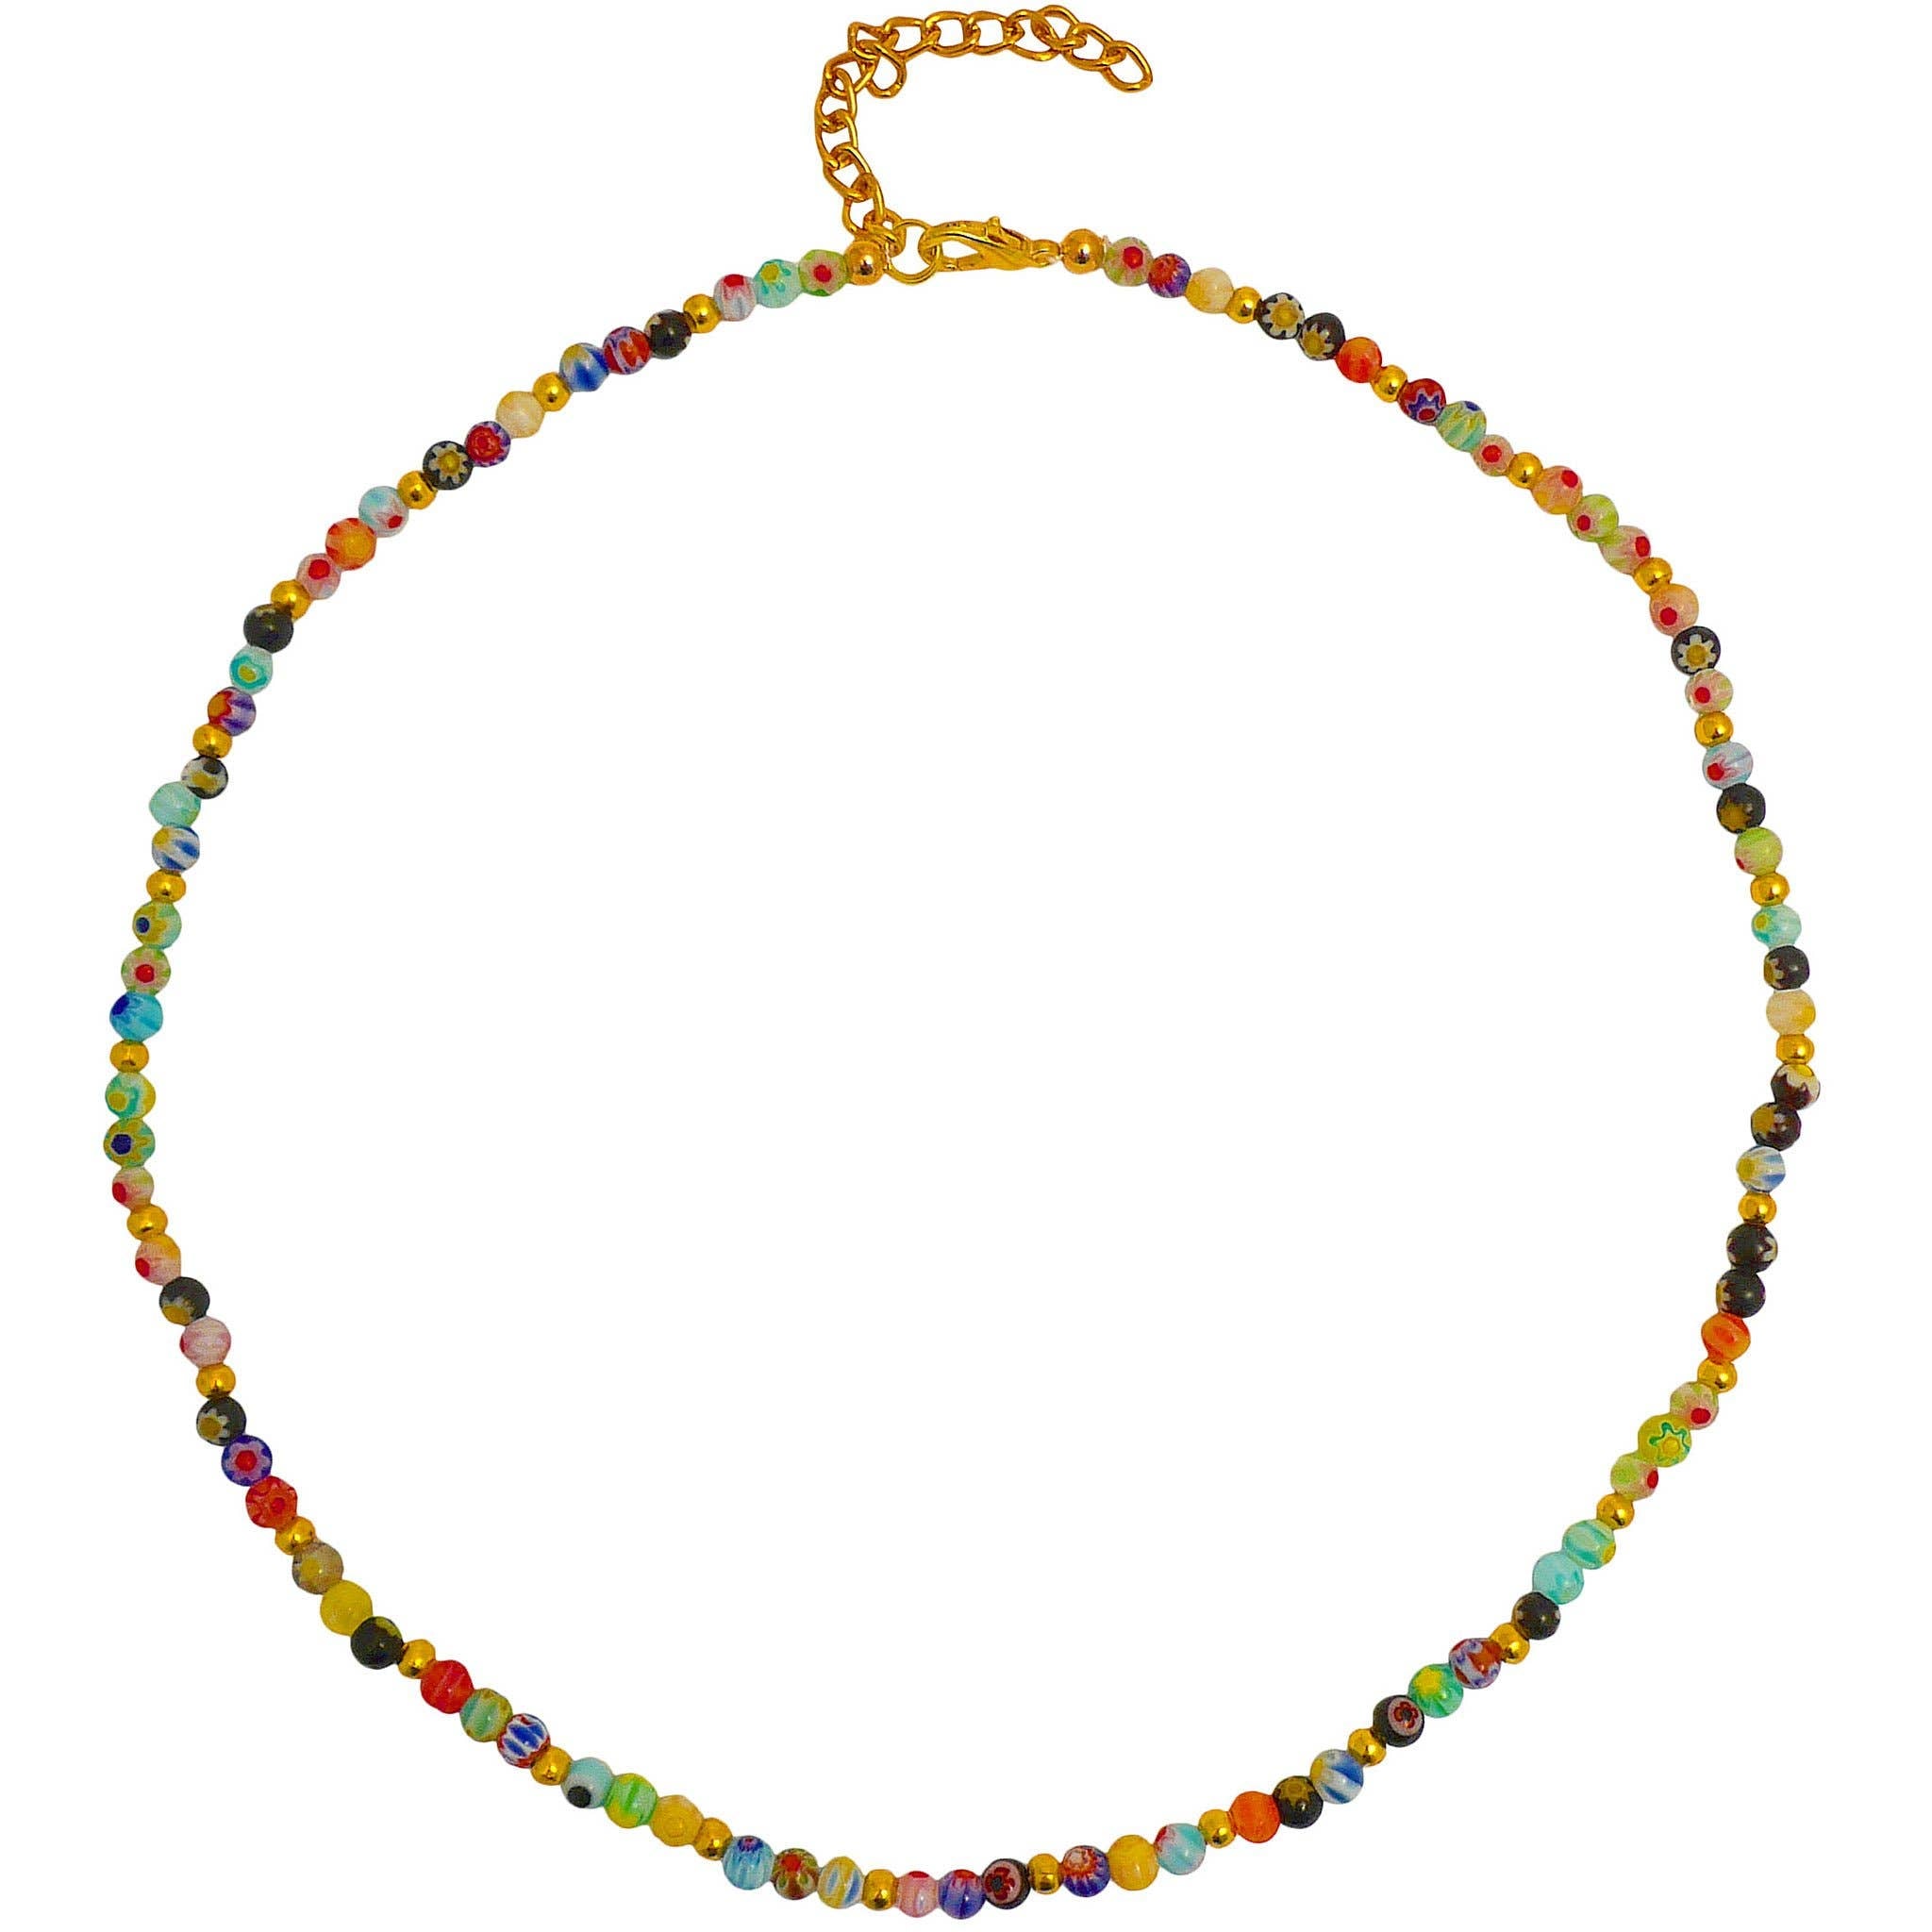 MB212 Millefiori Glass Bead Necklace